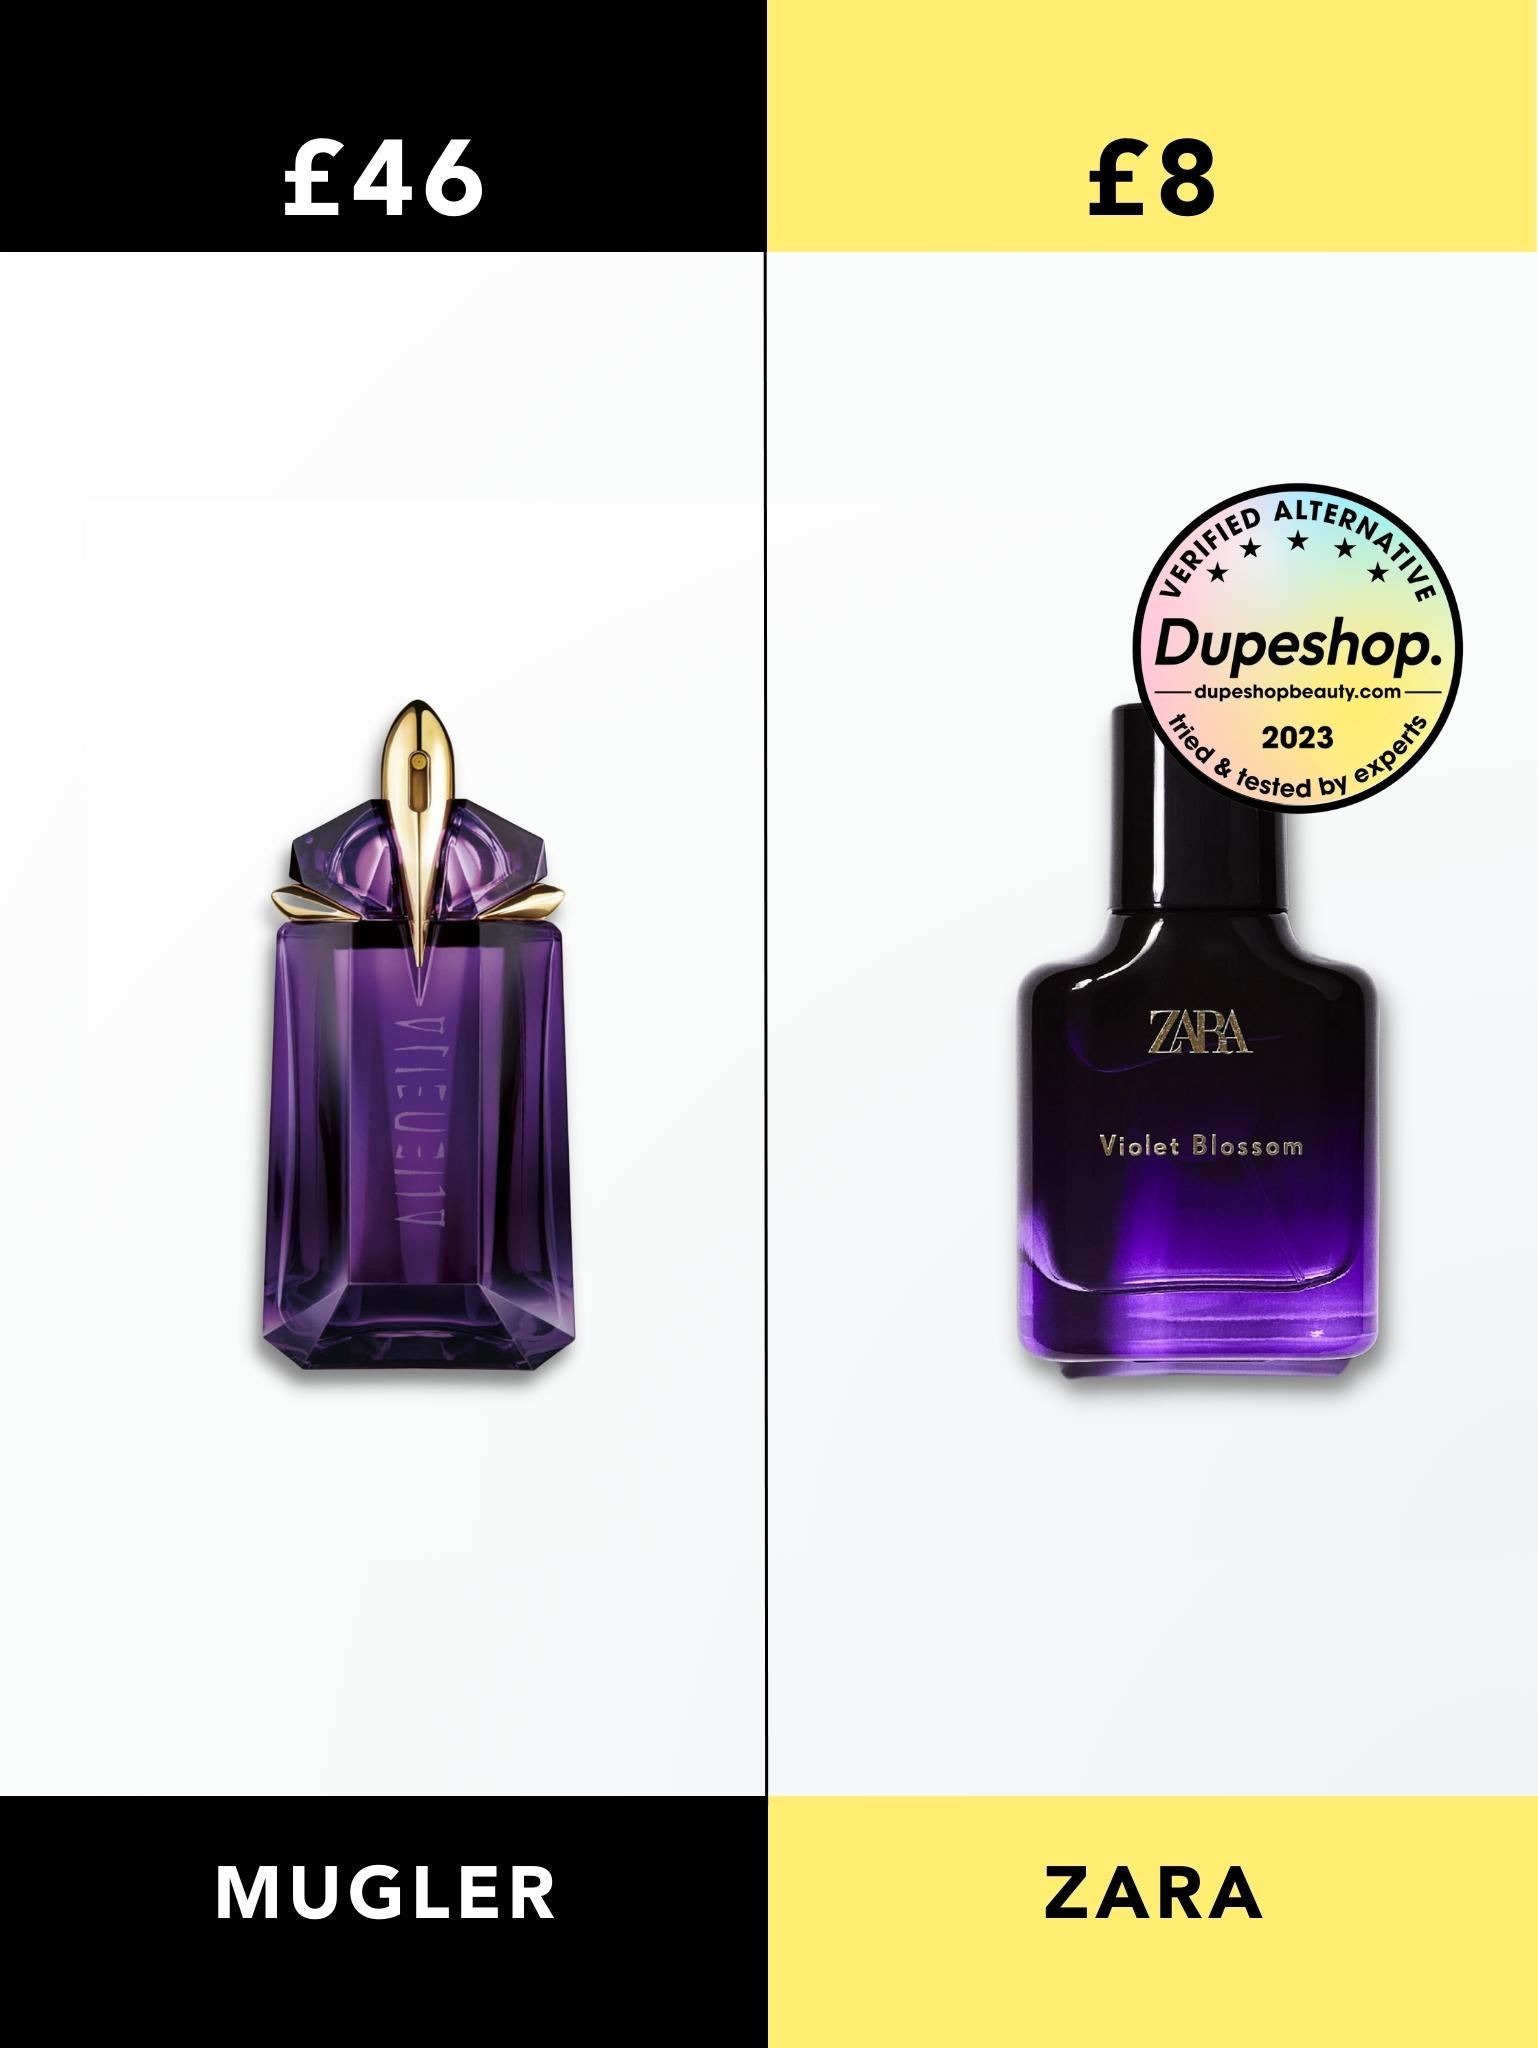 ULTIMATE list of ZARA's luxury perfume dupes